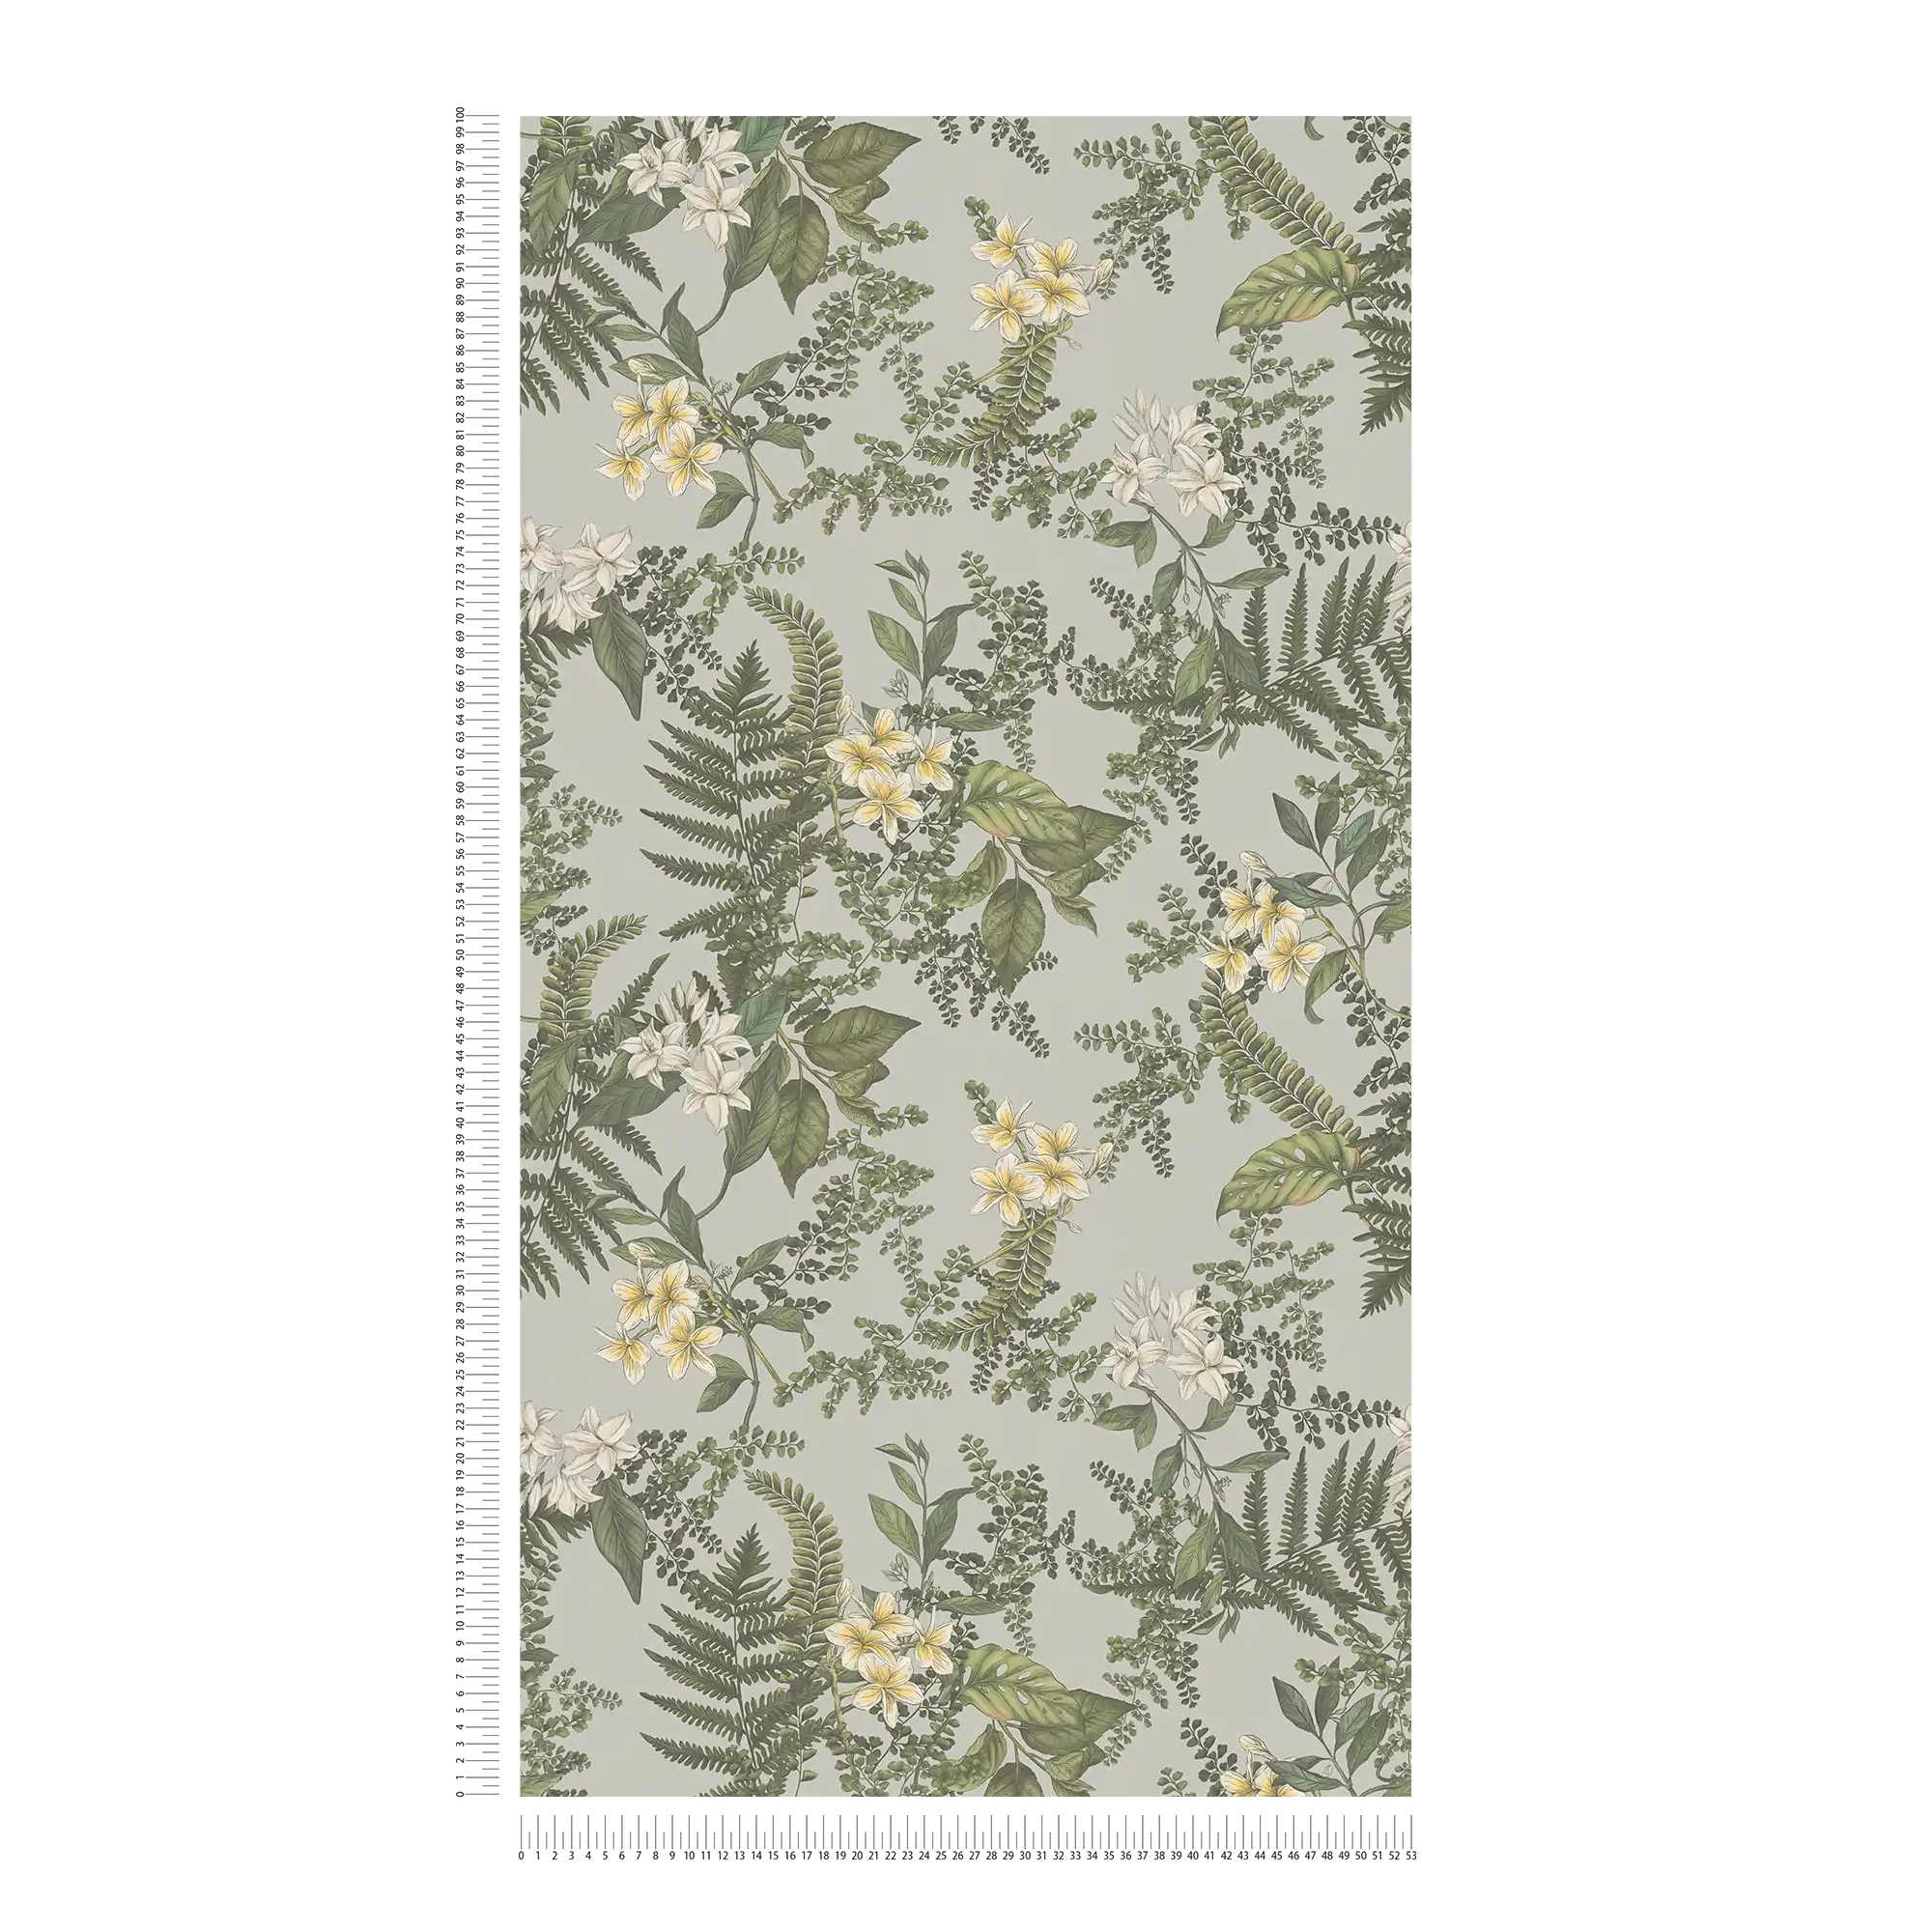             Modern floral style wallpaper with flowers & grasses textured matt - grey, dark green, white
        